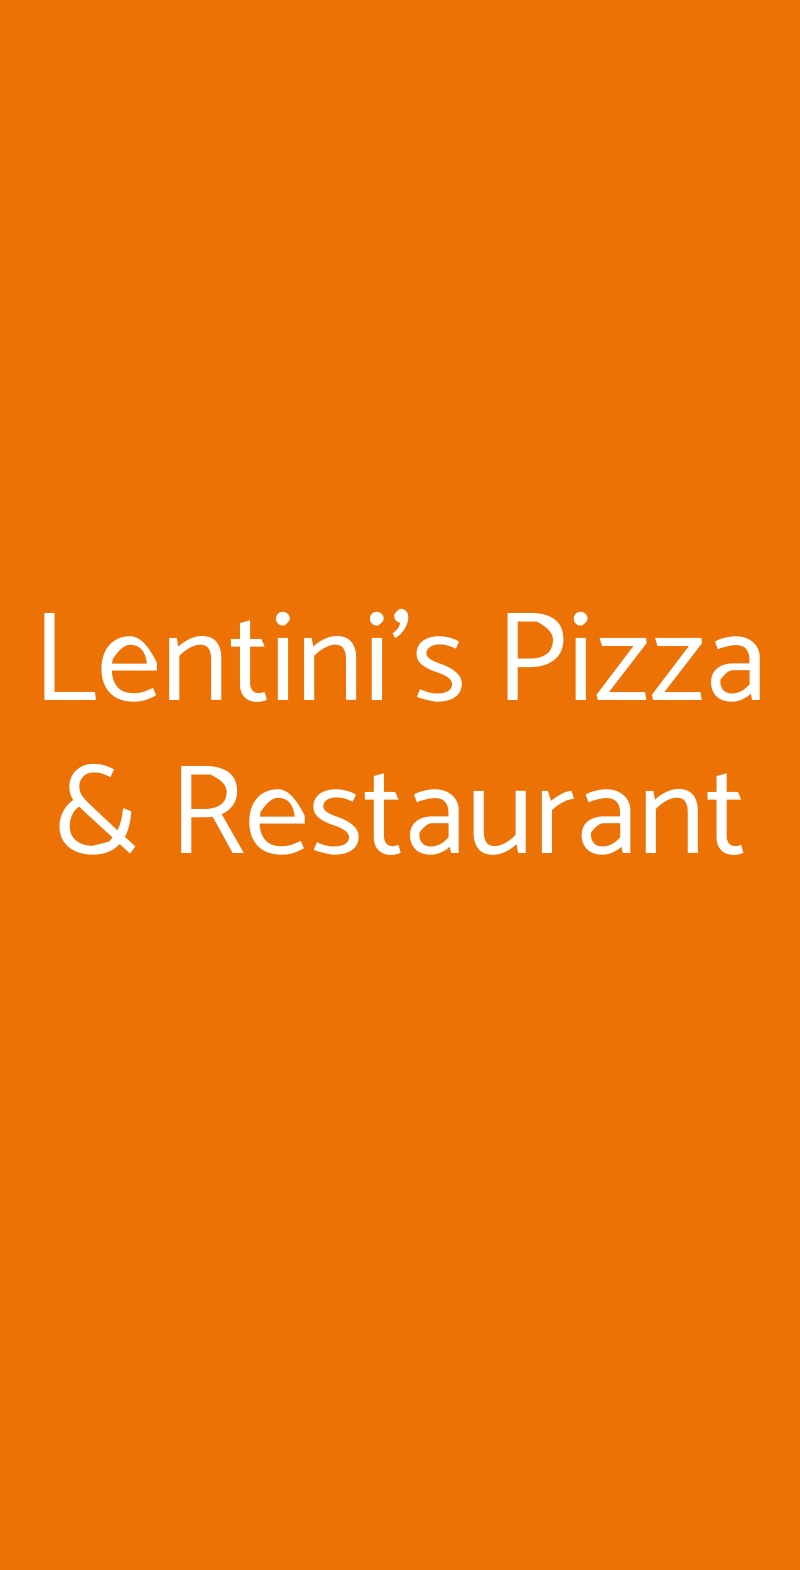 Lentini's Pizza & Restaurant Milano menù 1 pagina